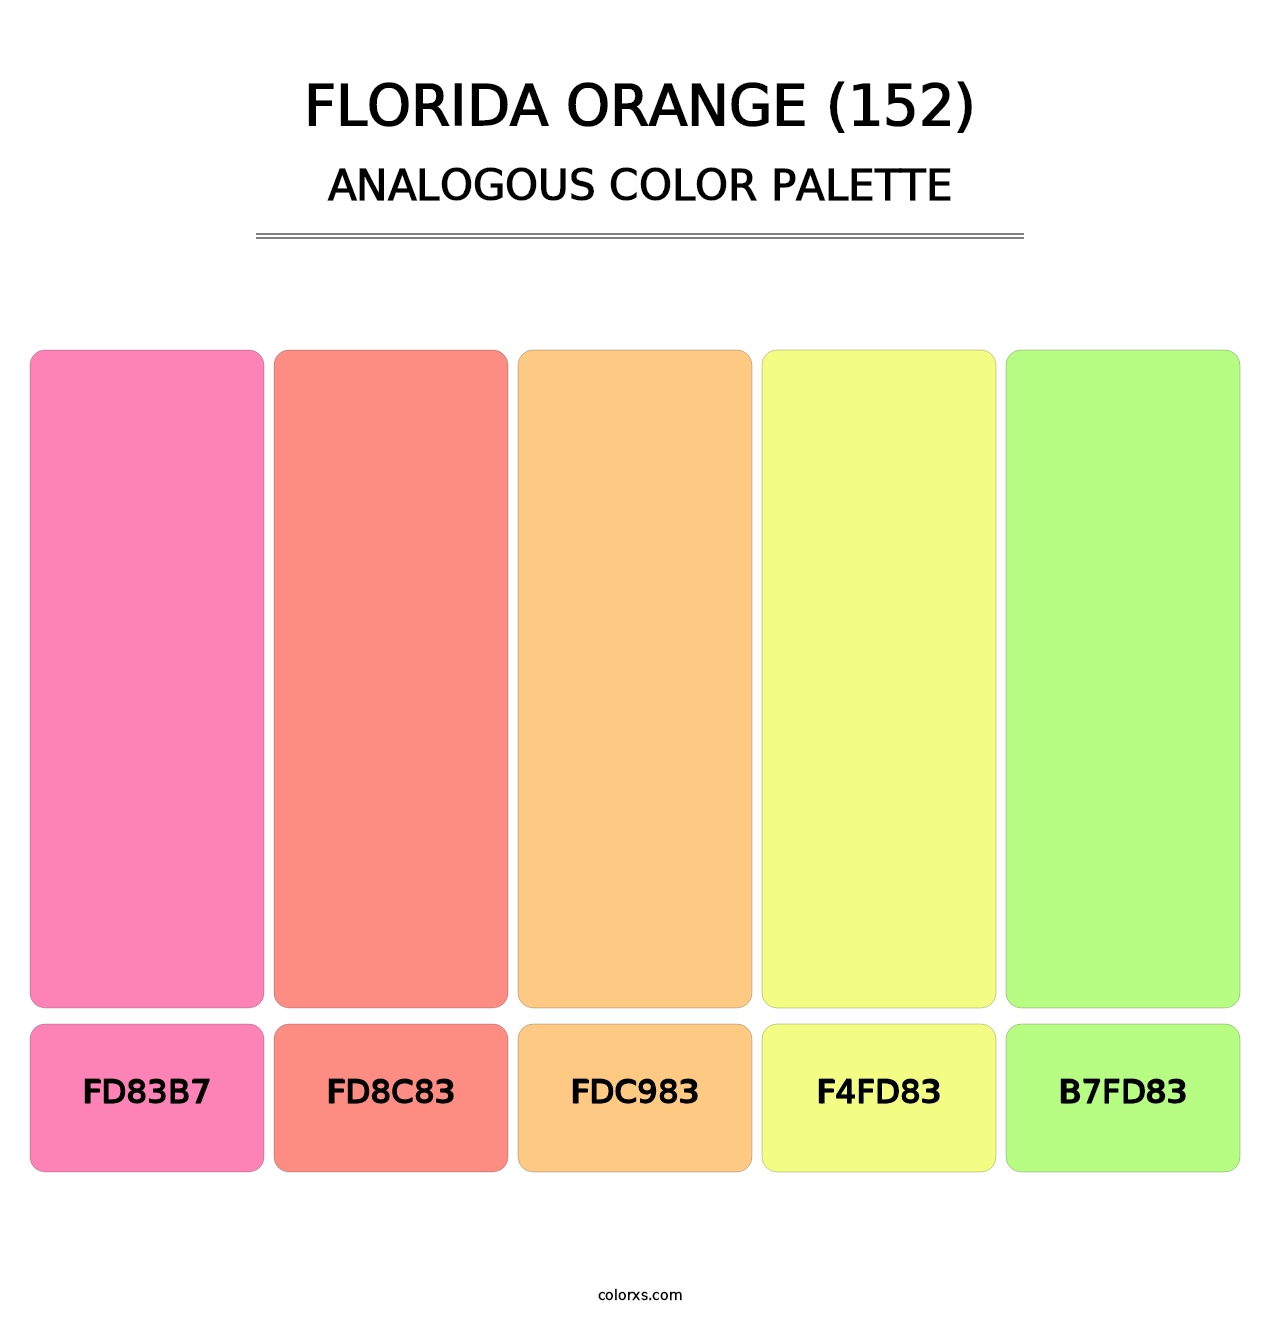 Florida Orange (152) - Analogous Color Palette